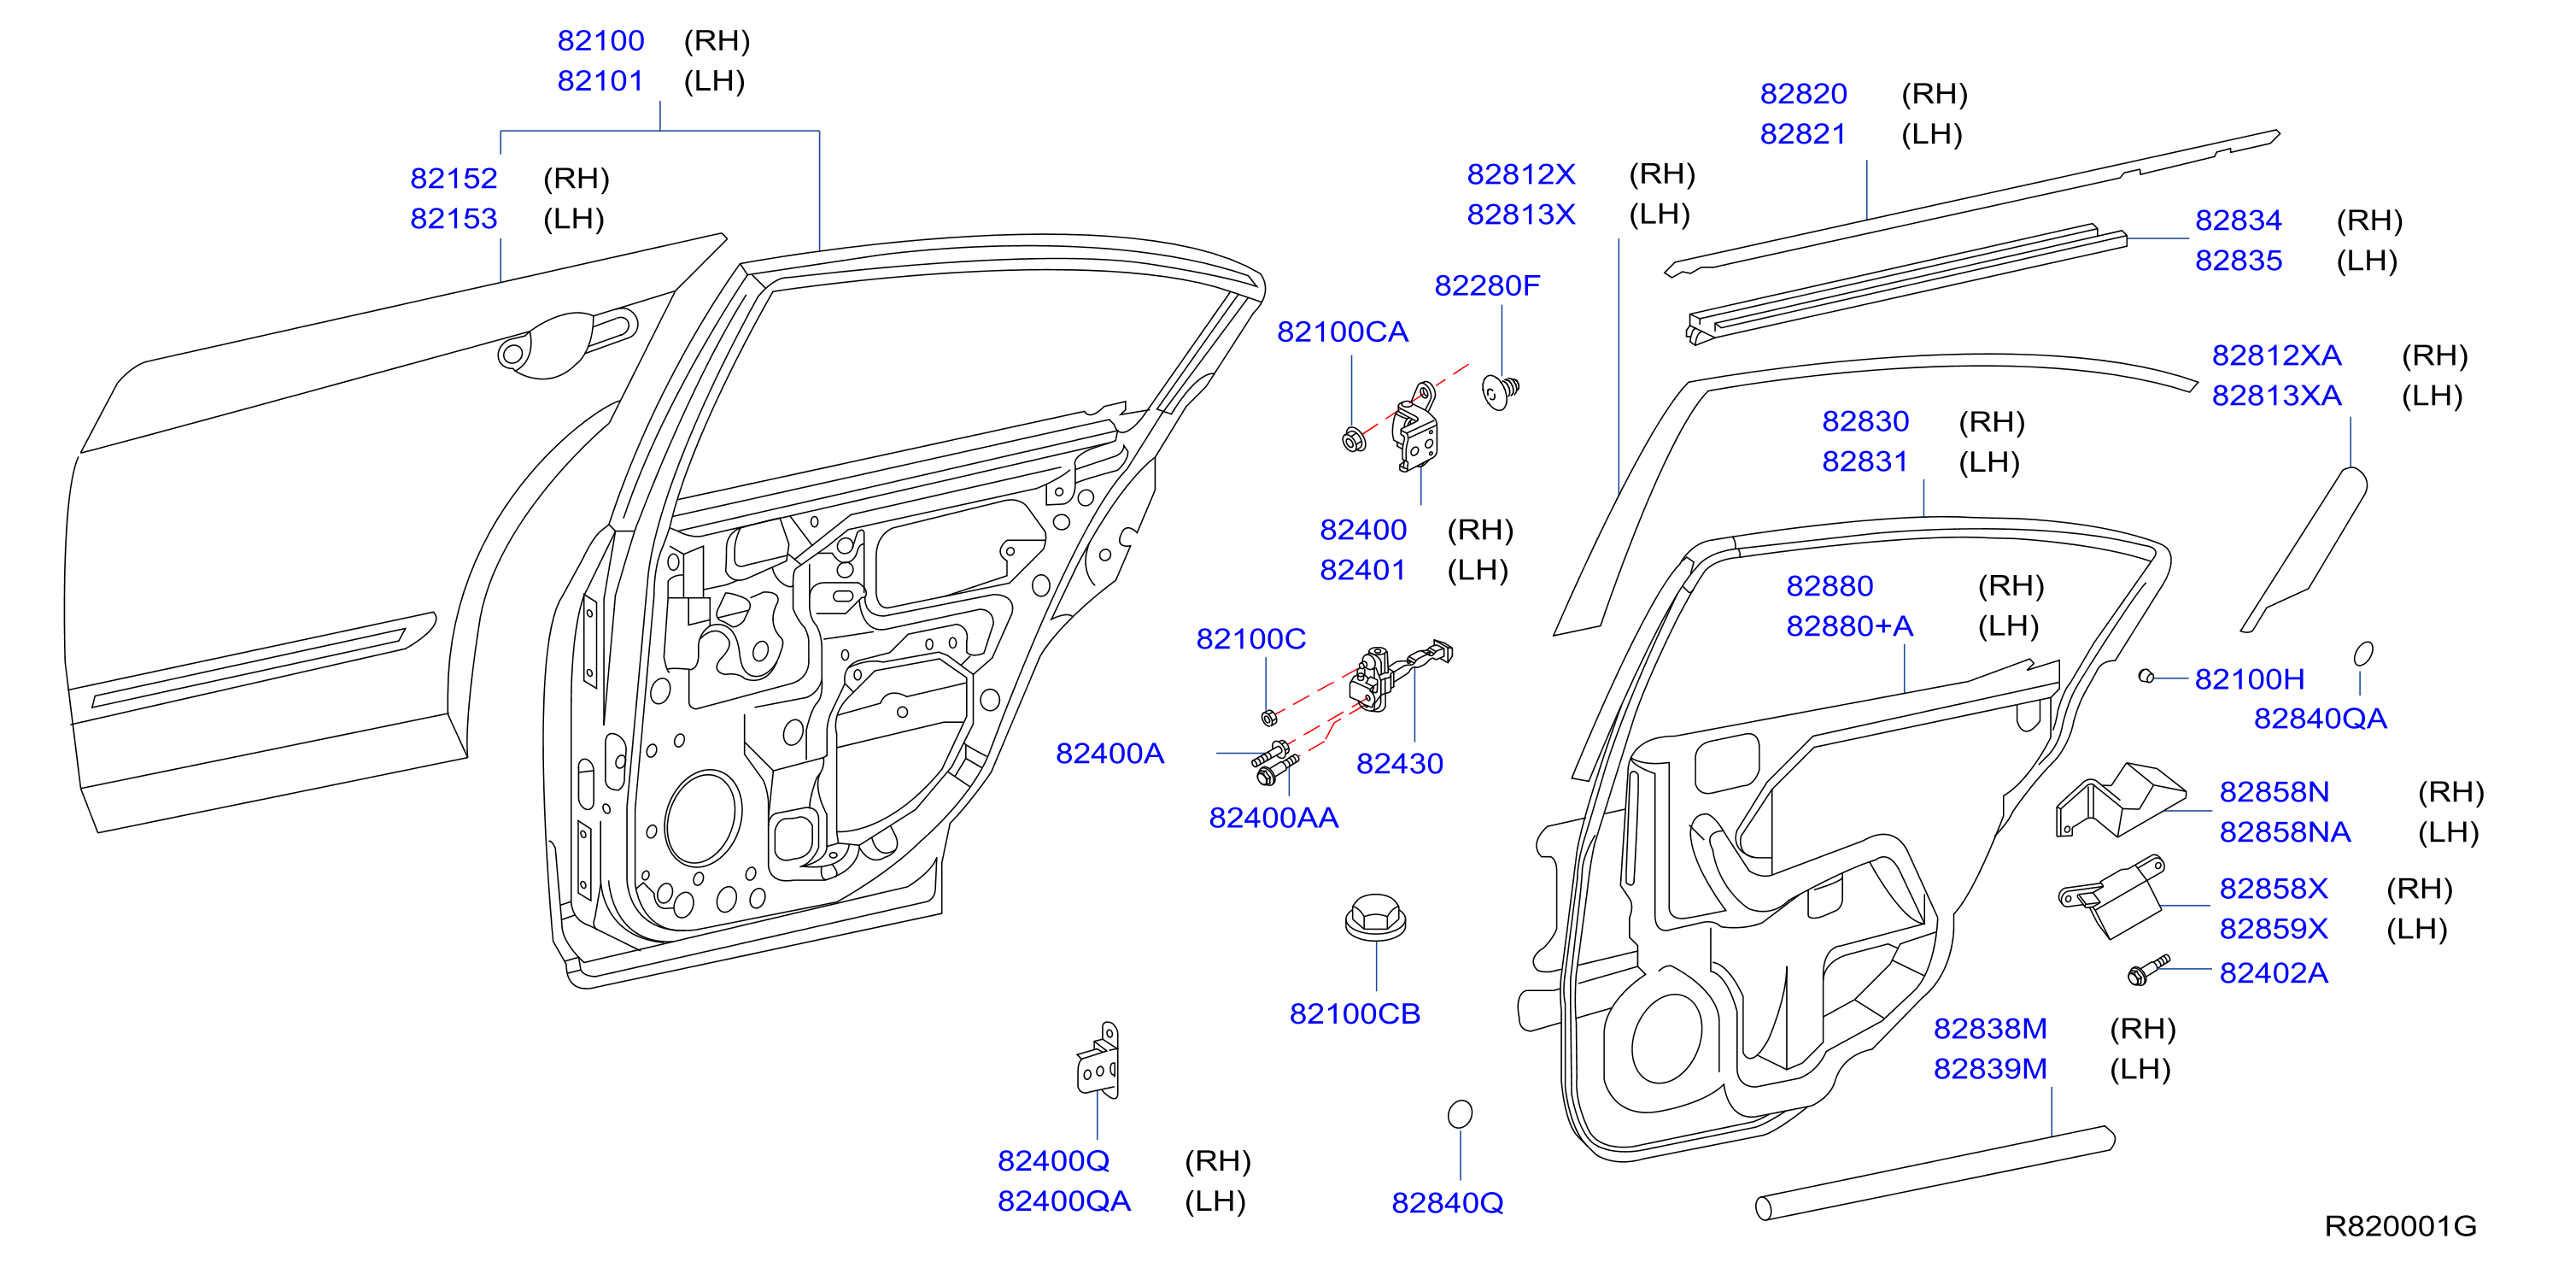 82831-ZX60A - Door Seal (Left, Right, Rear) - Genuine Nissan Part